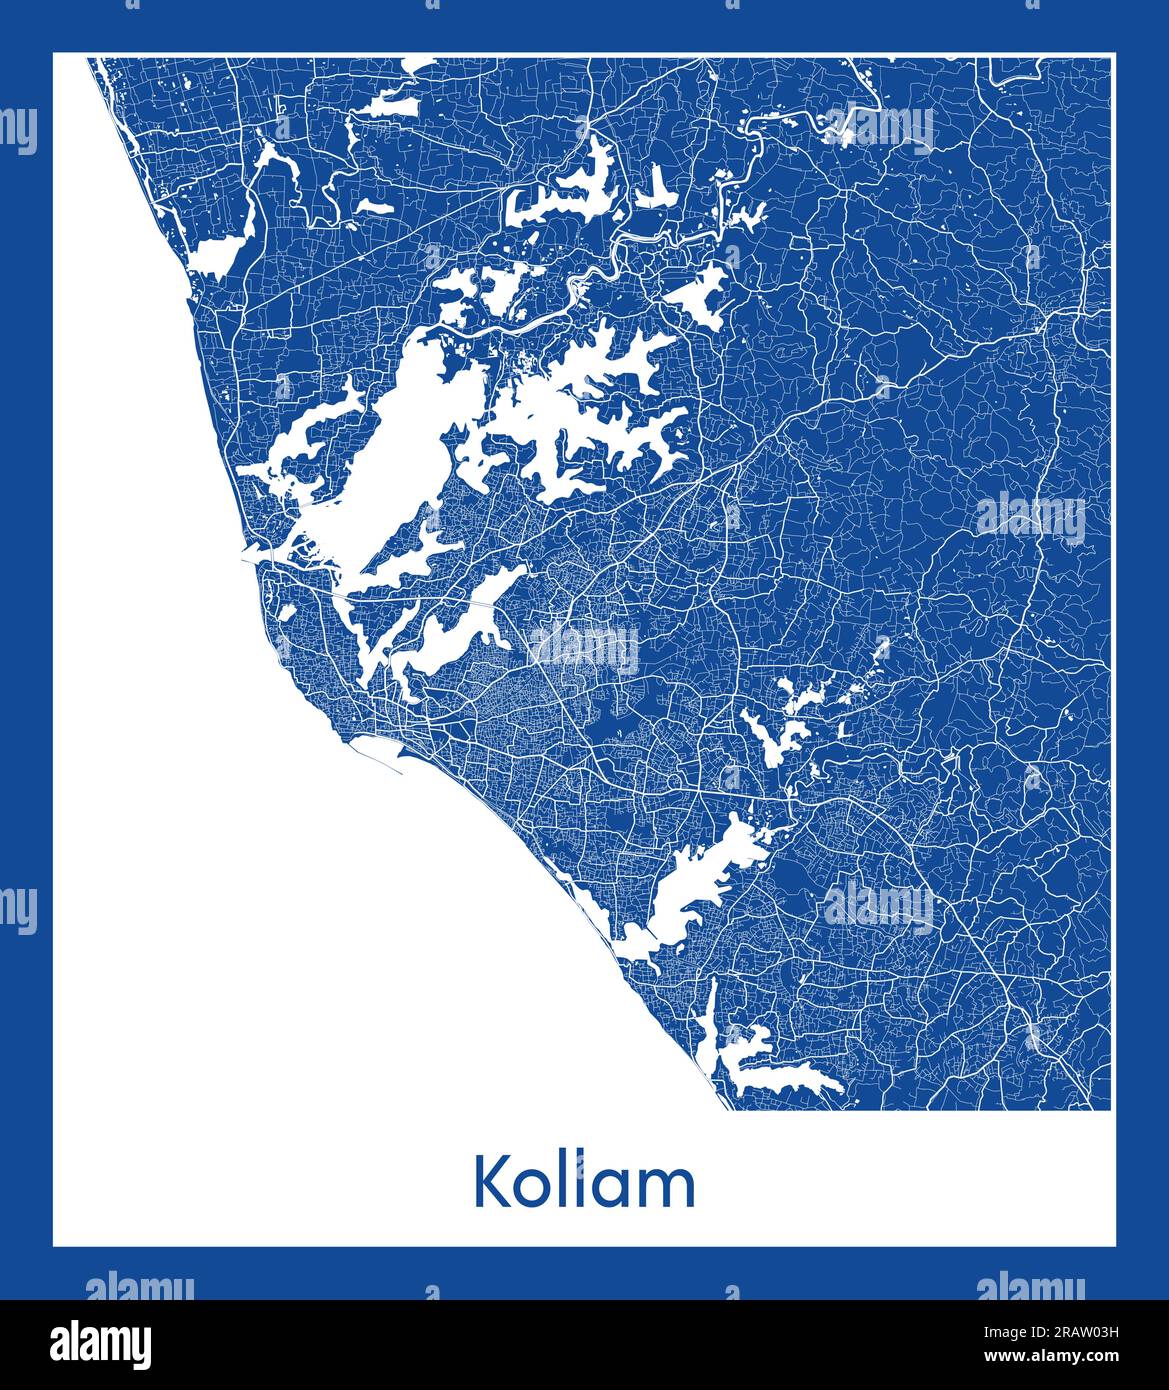 Kollam India Asia City map blue print vector illustration Stock Vector